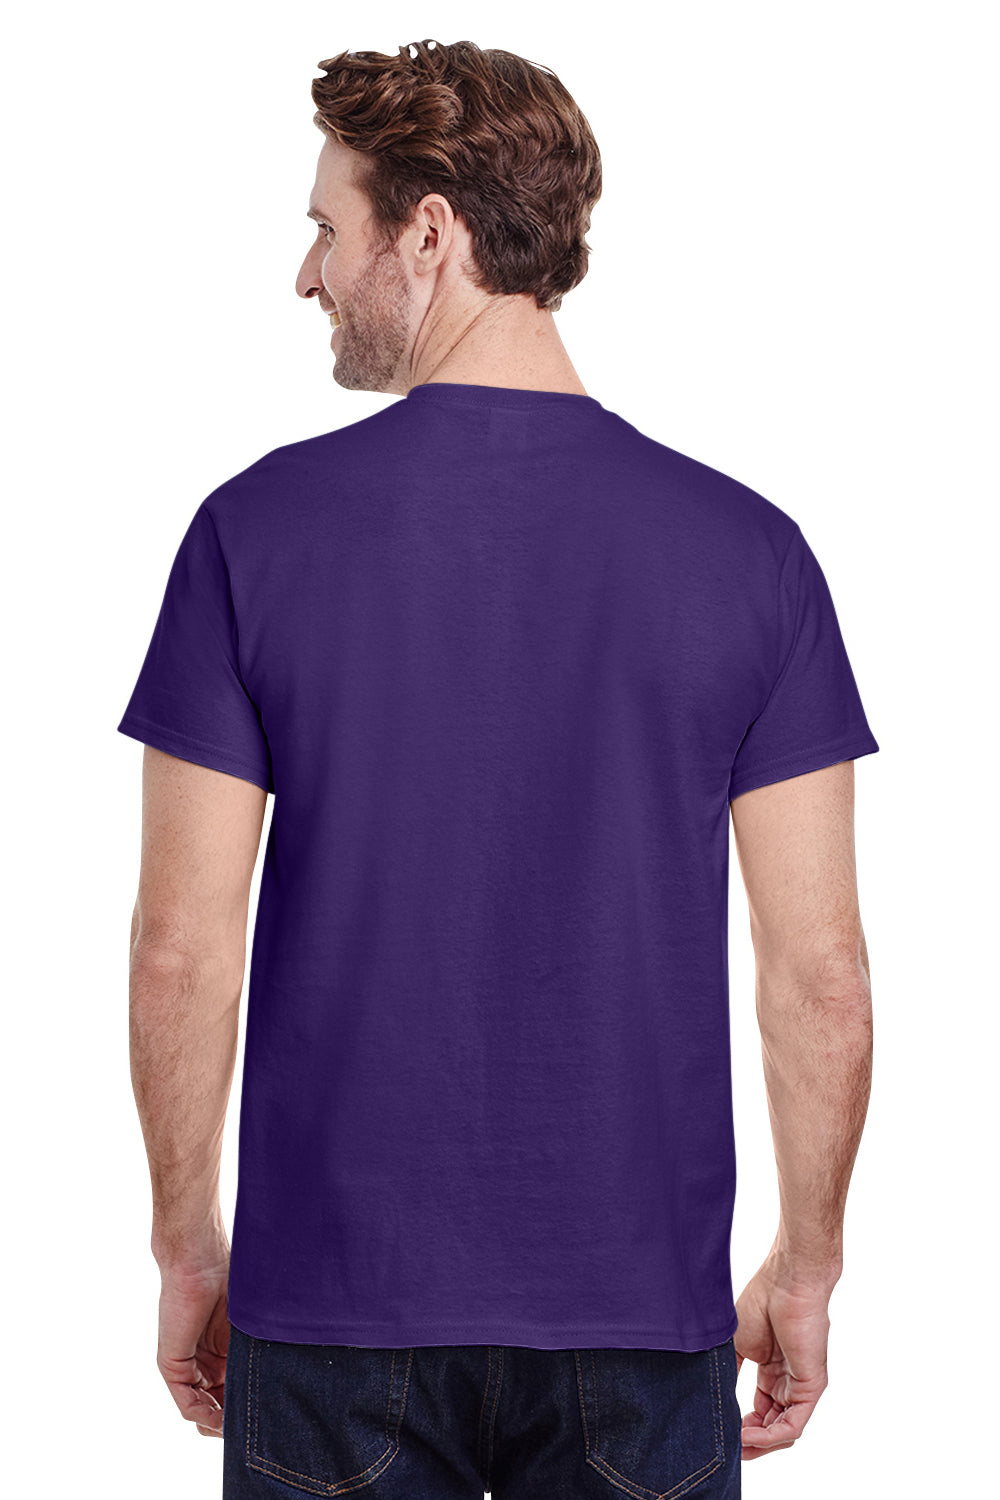 Gildan G500 Mens Short Sleeve Crewneck T-Shirt Lilac Purple Back